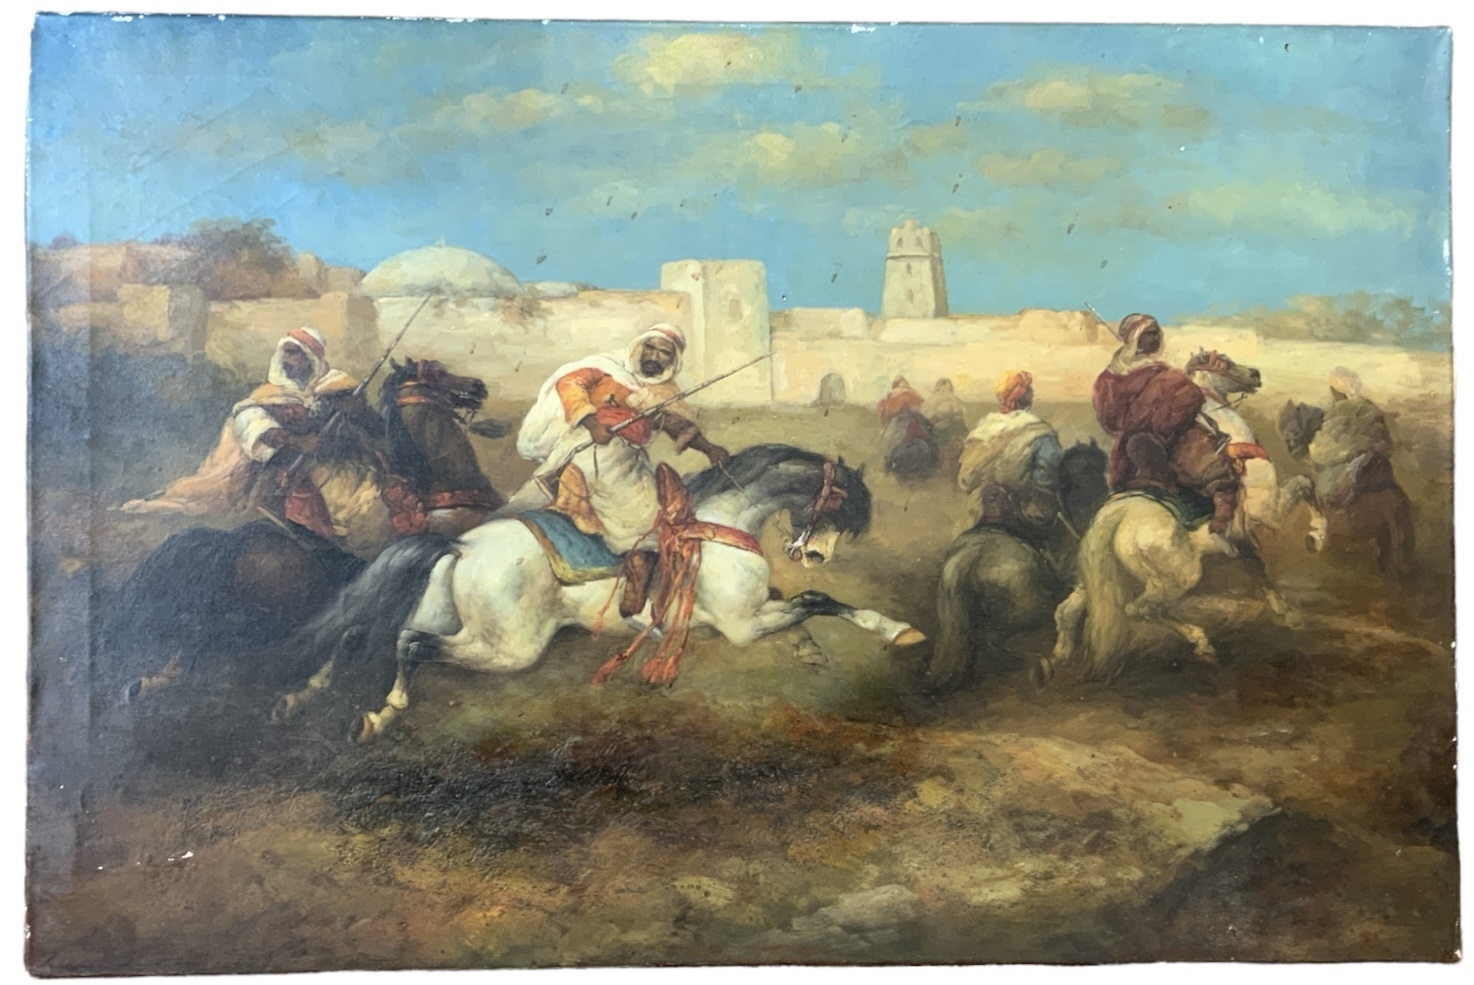 figures on horseback in battle - Christian Adolph Schreyer